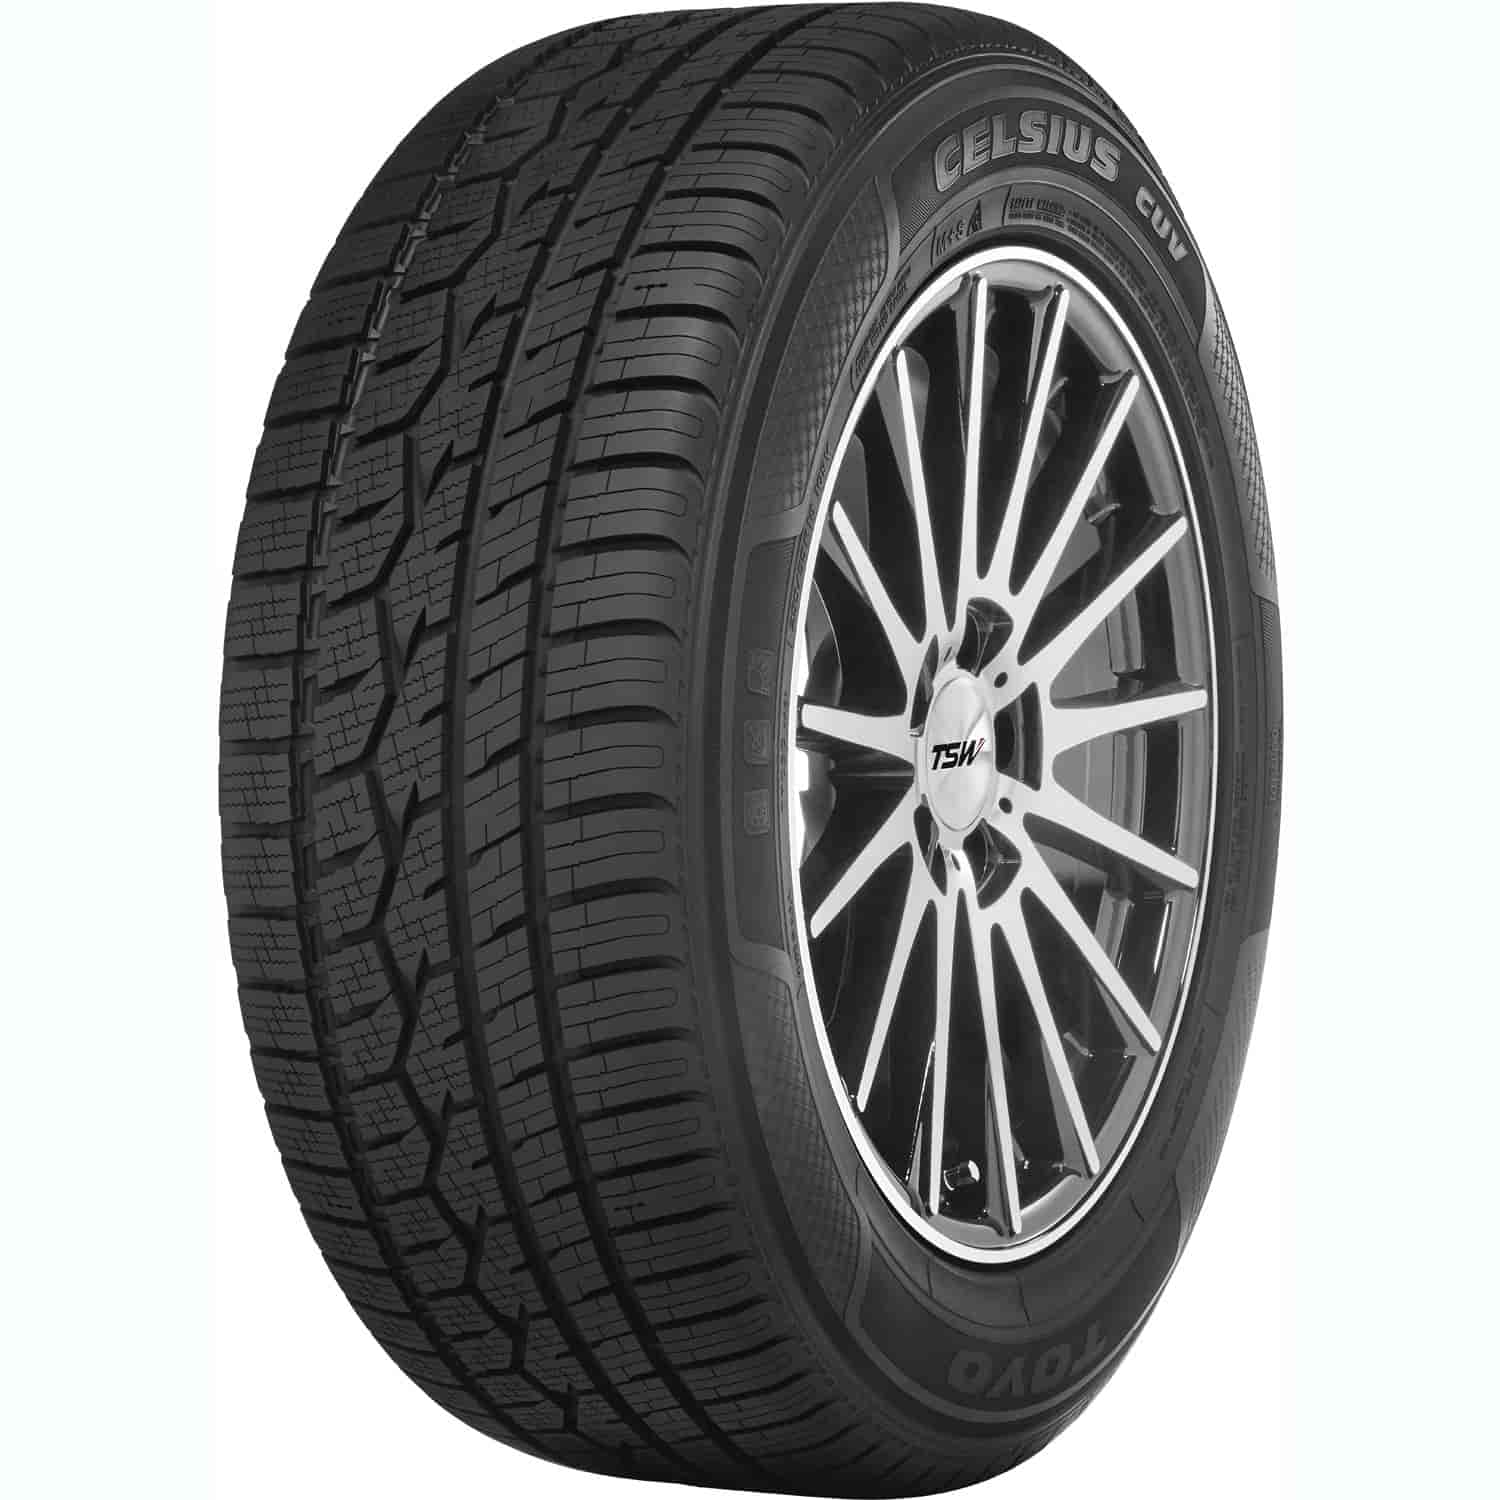 Celsius CUV Tire 275/55R20